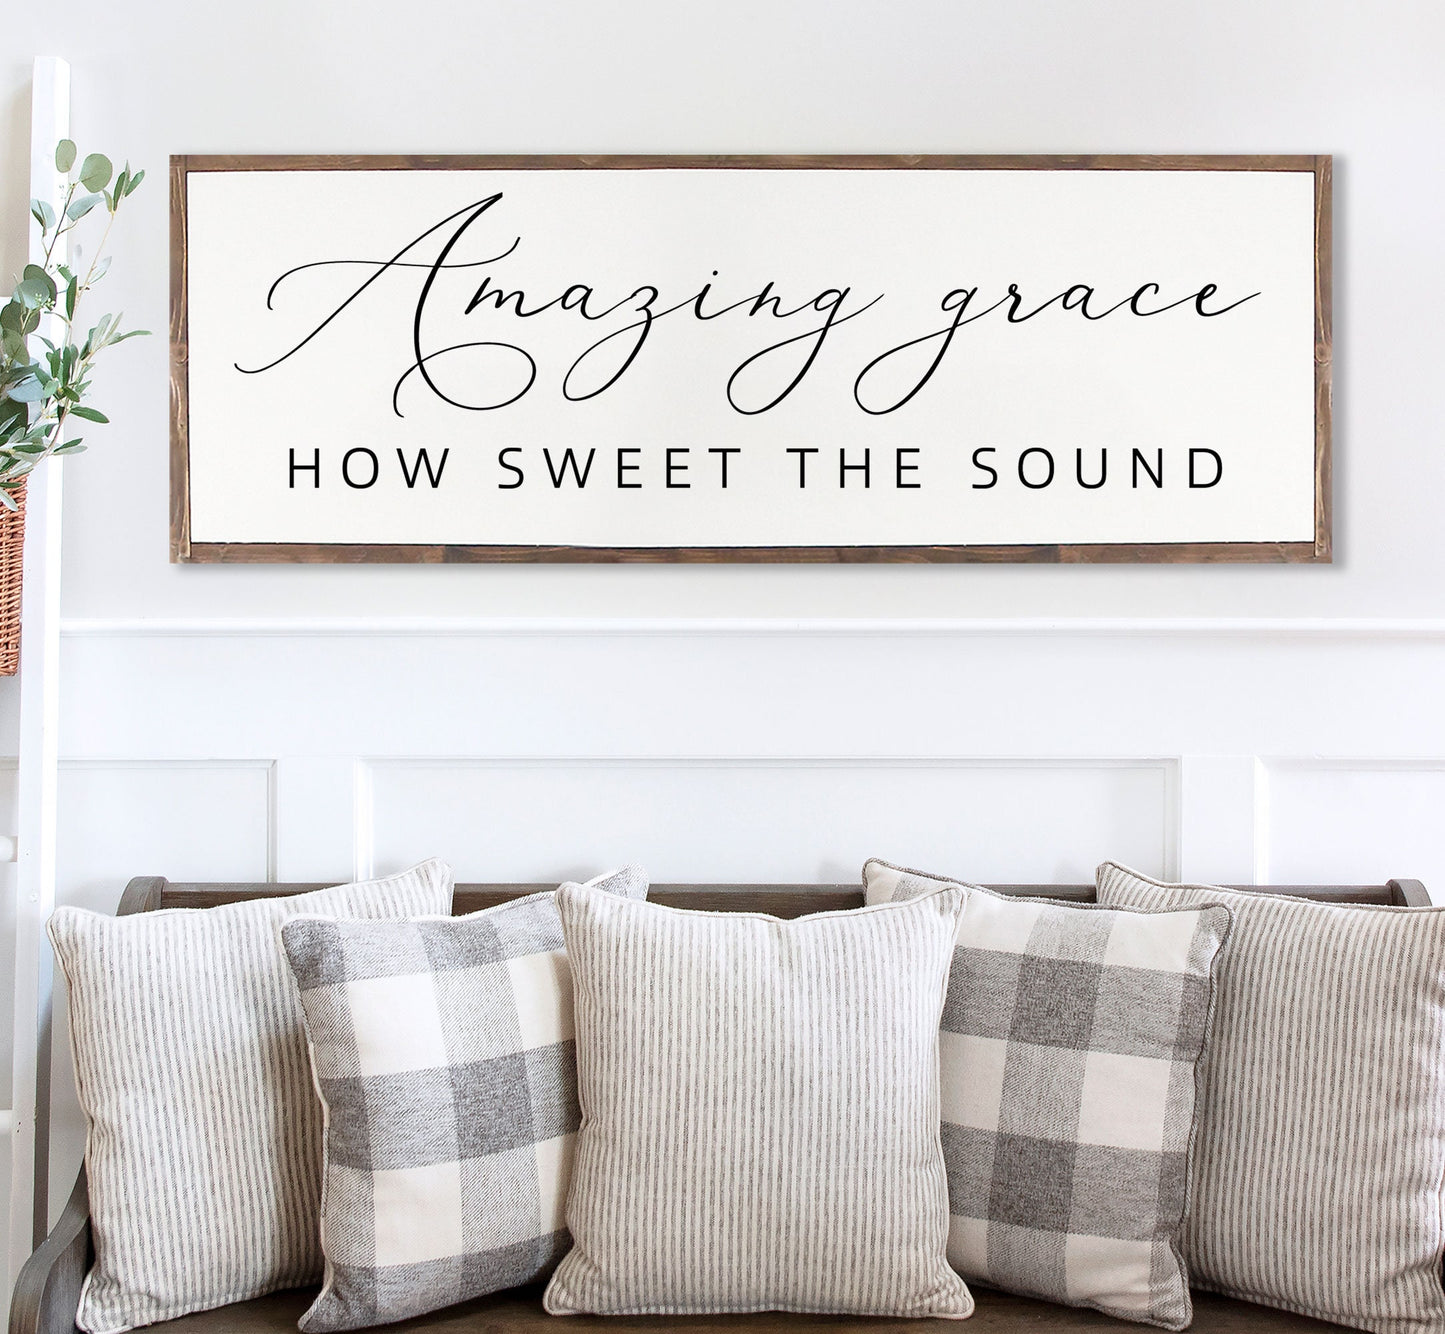 Amazing Grace How Sweet The Sound Sign Farmhouse | CHRISTIAN WALL ART | Home Décor | framed Wood Sign | Family Room Sign | Farmhouse Sign